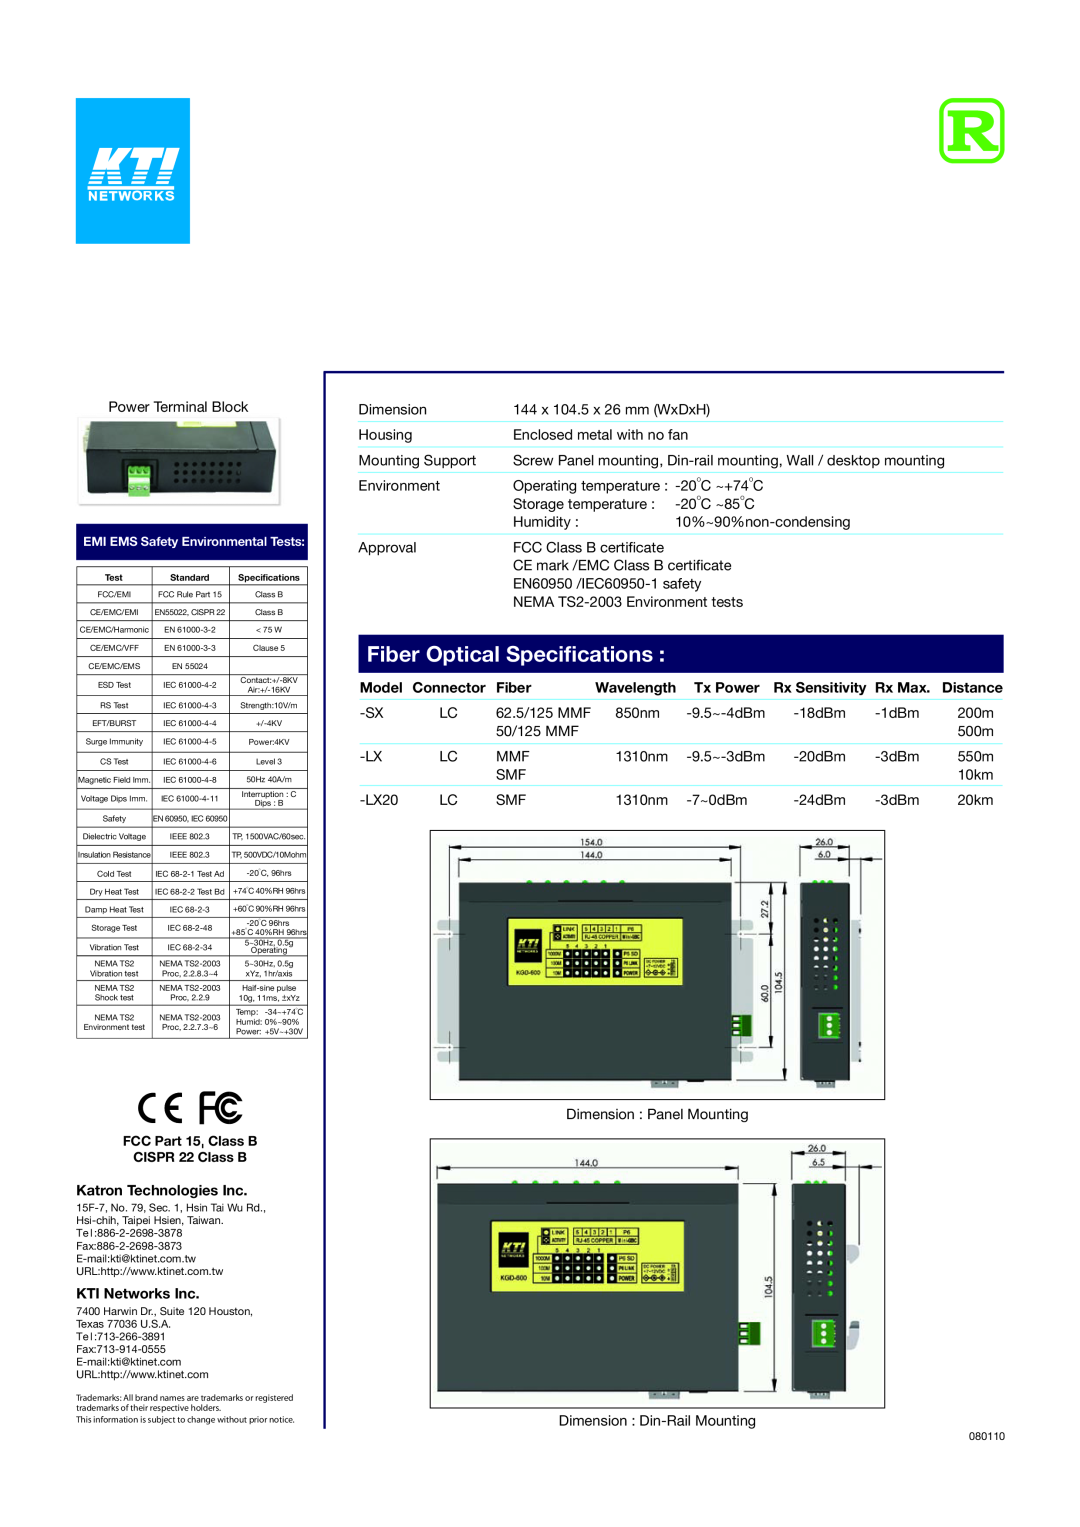 KTI Networks KGD-600 Fiber Optical Specifications, Model, Wavelength, Tx Power, Rx Max, Katron Technologies Inc 